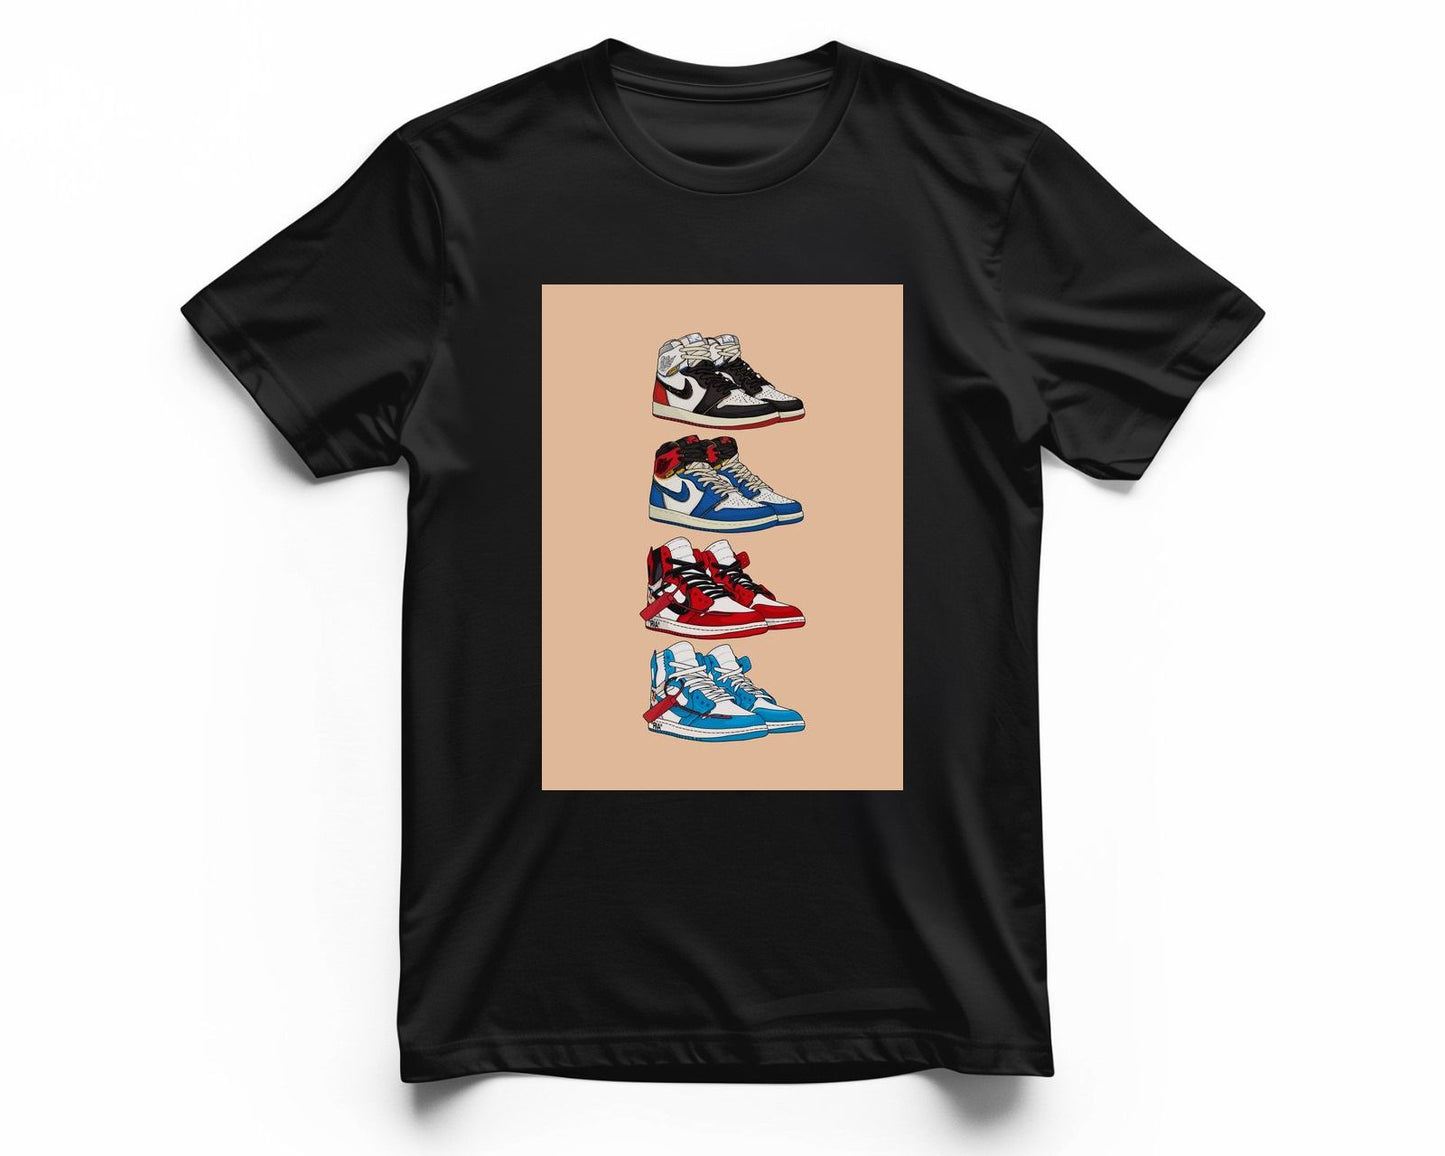 sneakers collector 0050 - @Ciat.kicks